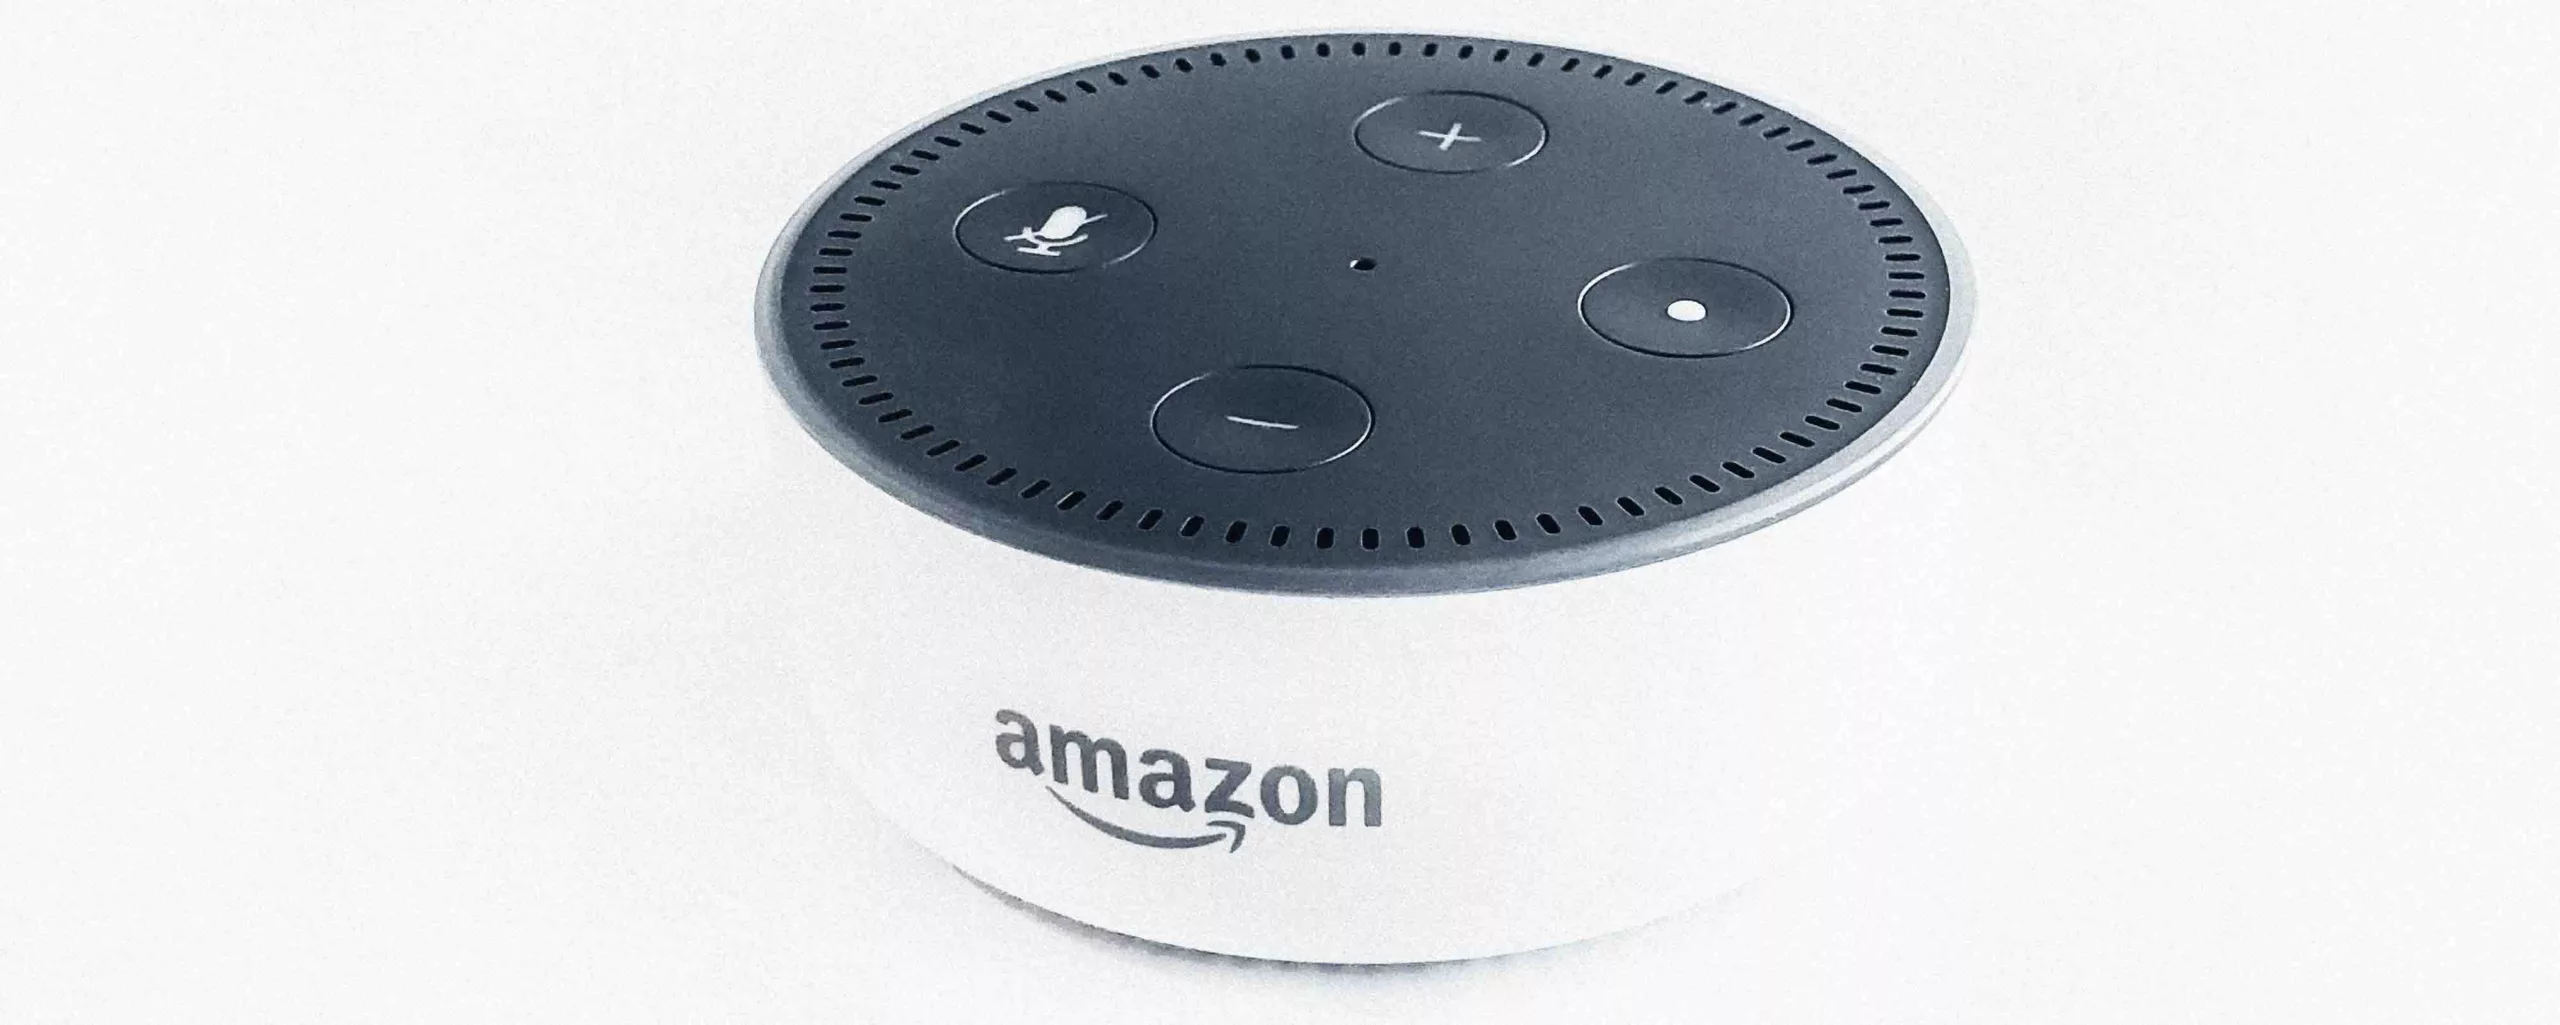 Amazon Echo Dot smart speaker on white background